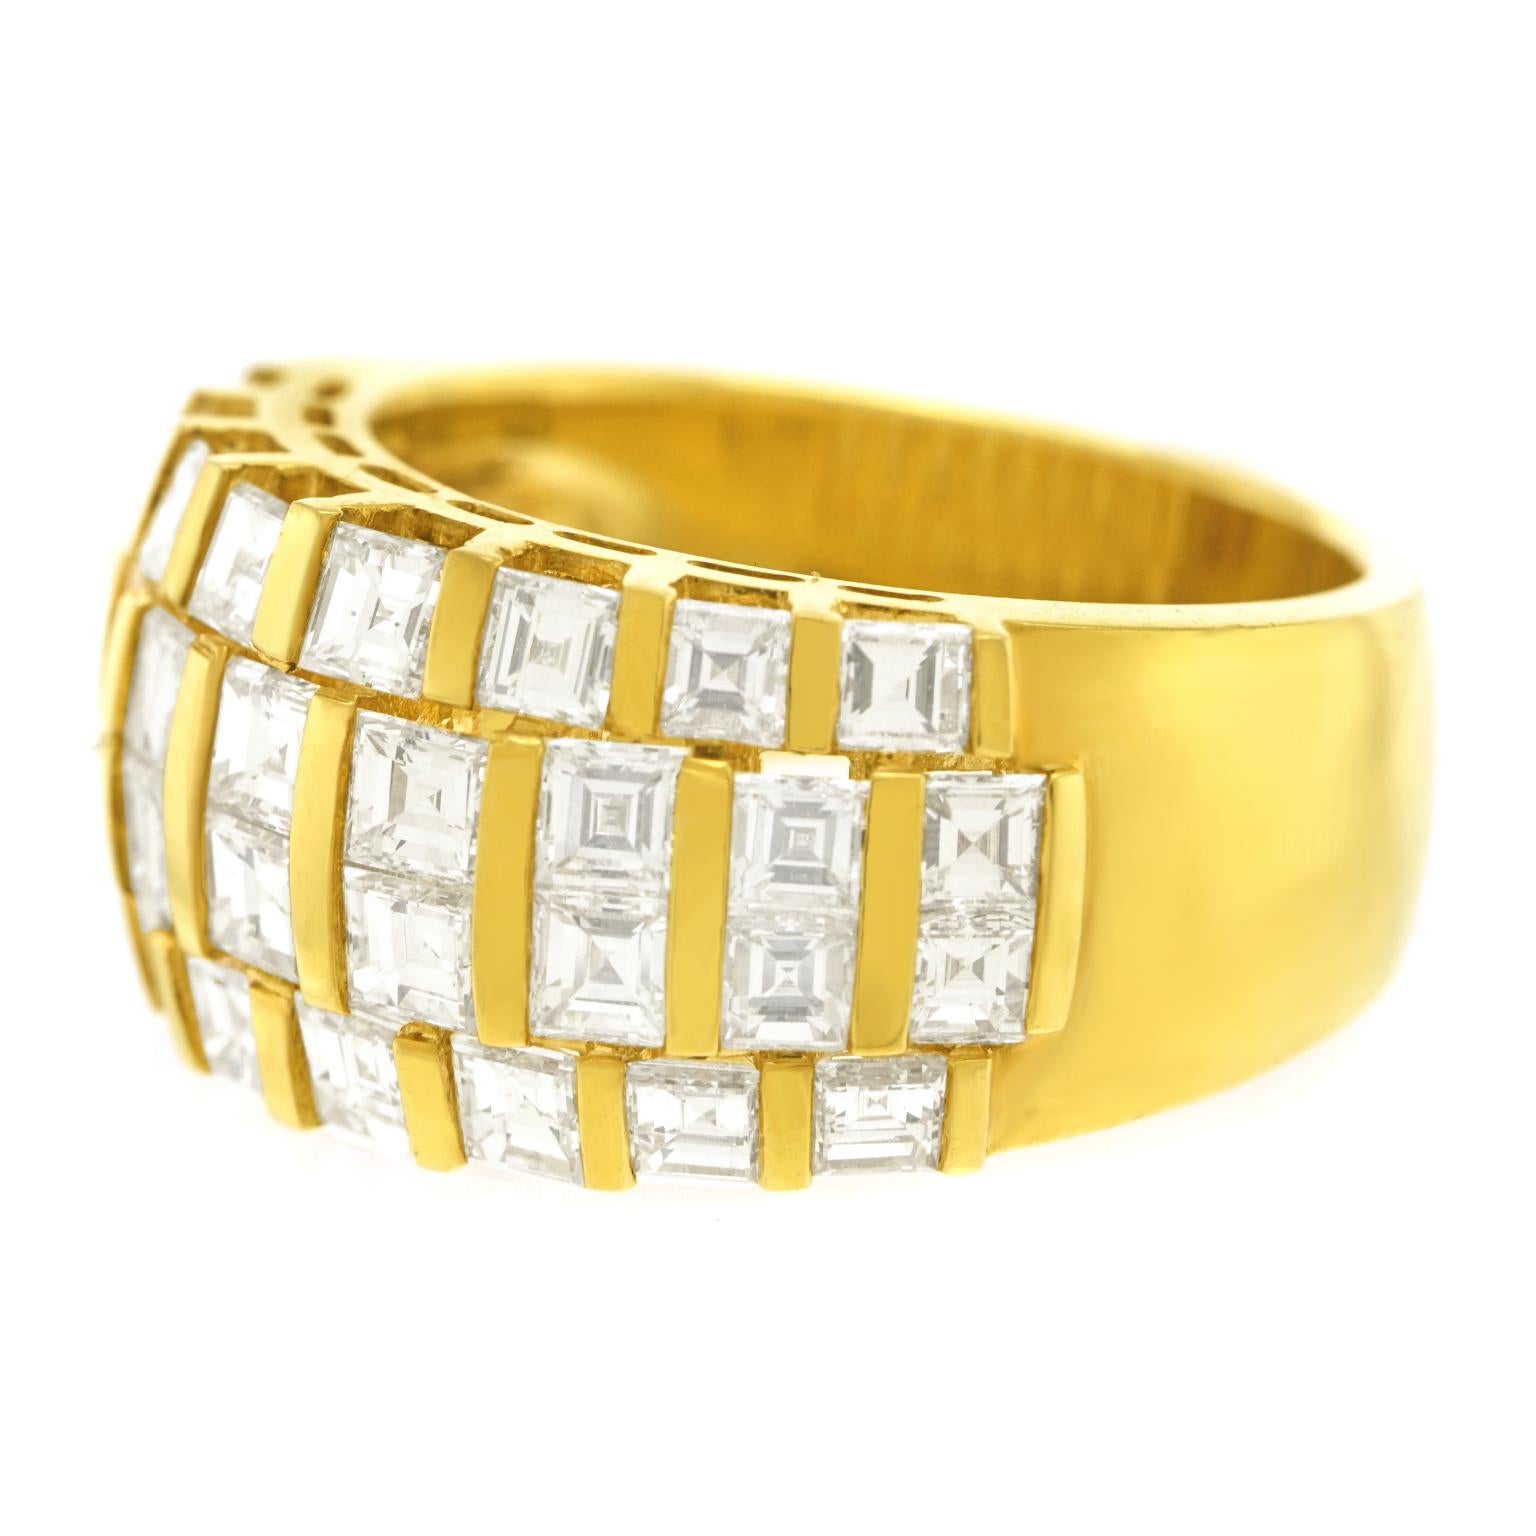 Modernist Swiss Modern Seventies Diamond-Set Gold Ring